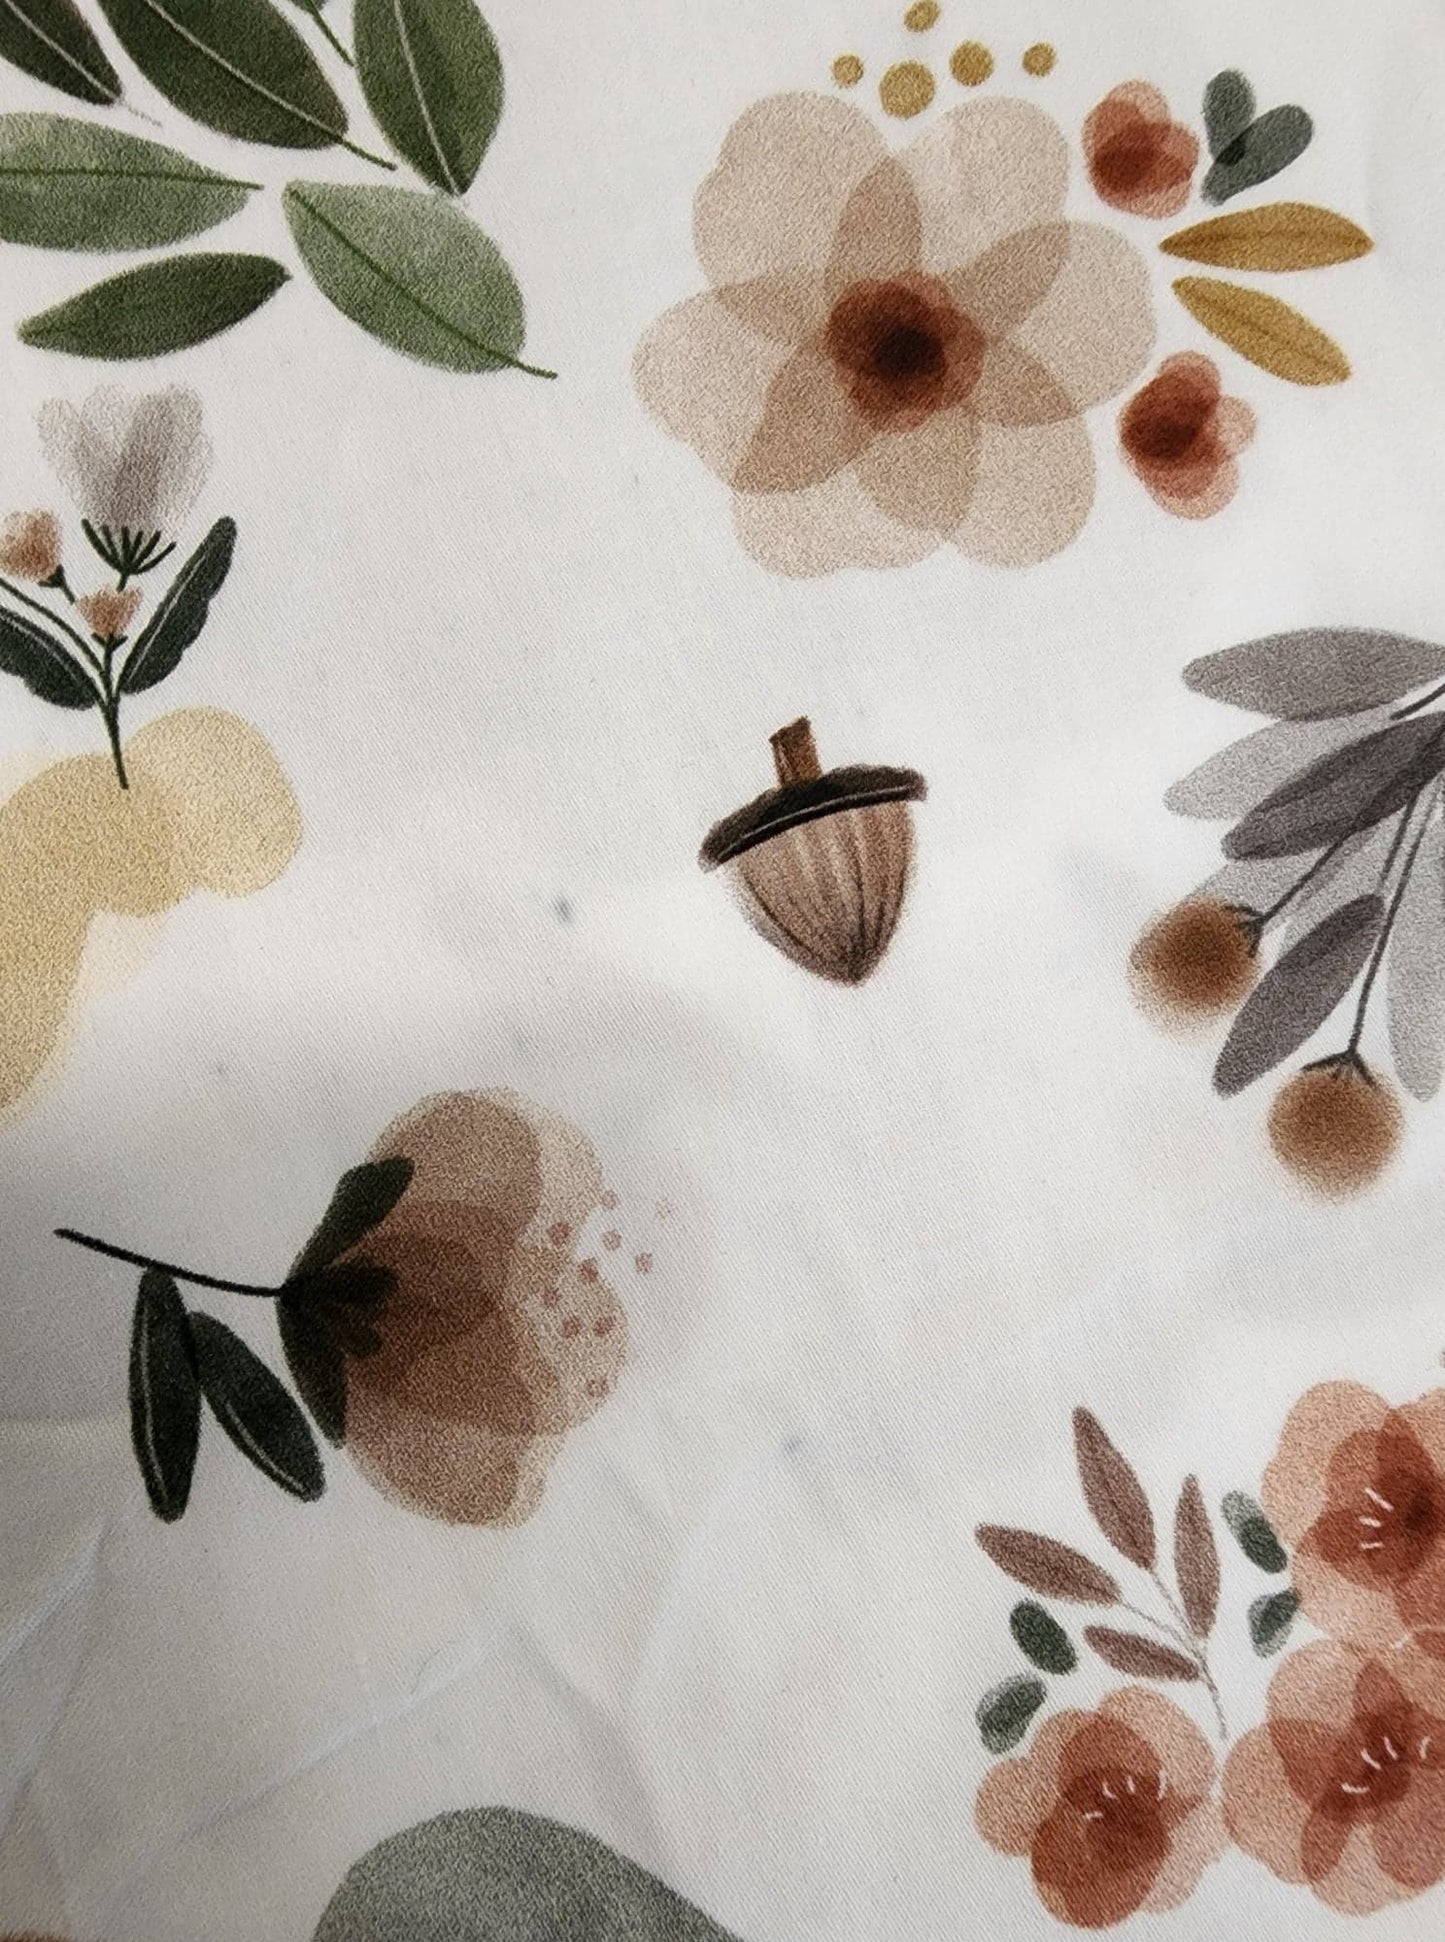 Woodland Wonderland 3 Inch *Seconds* - 100% Cotton Woven Fabric